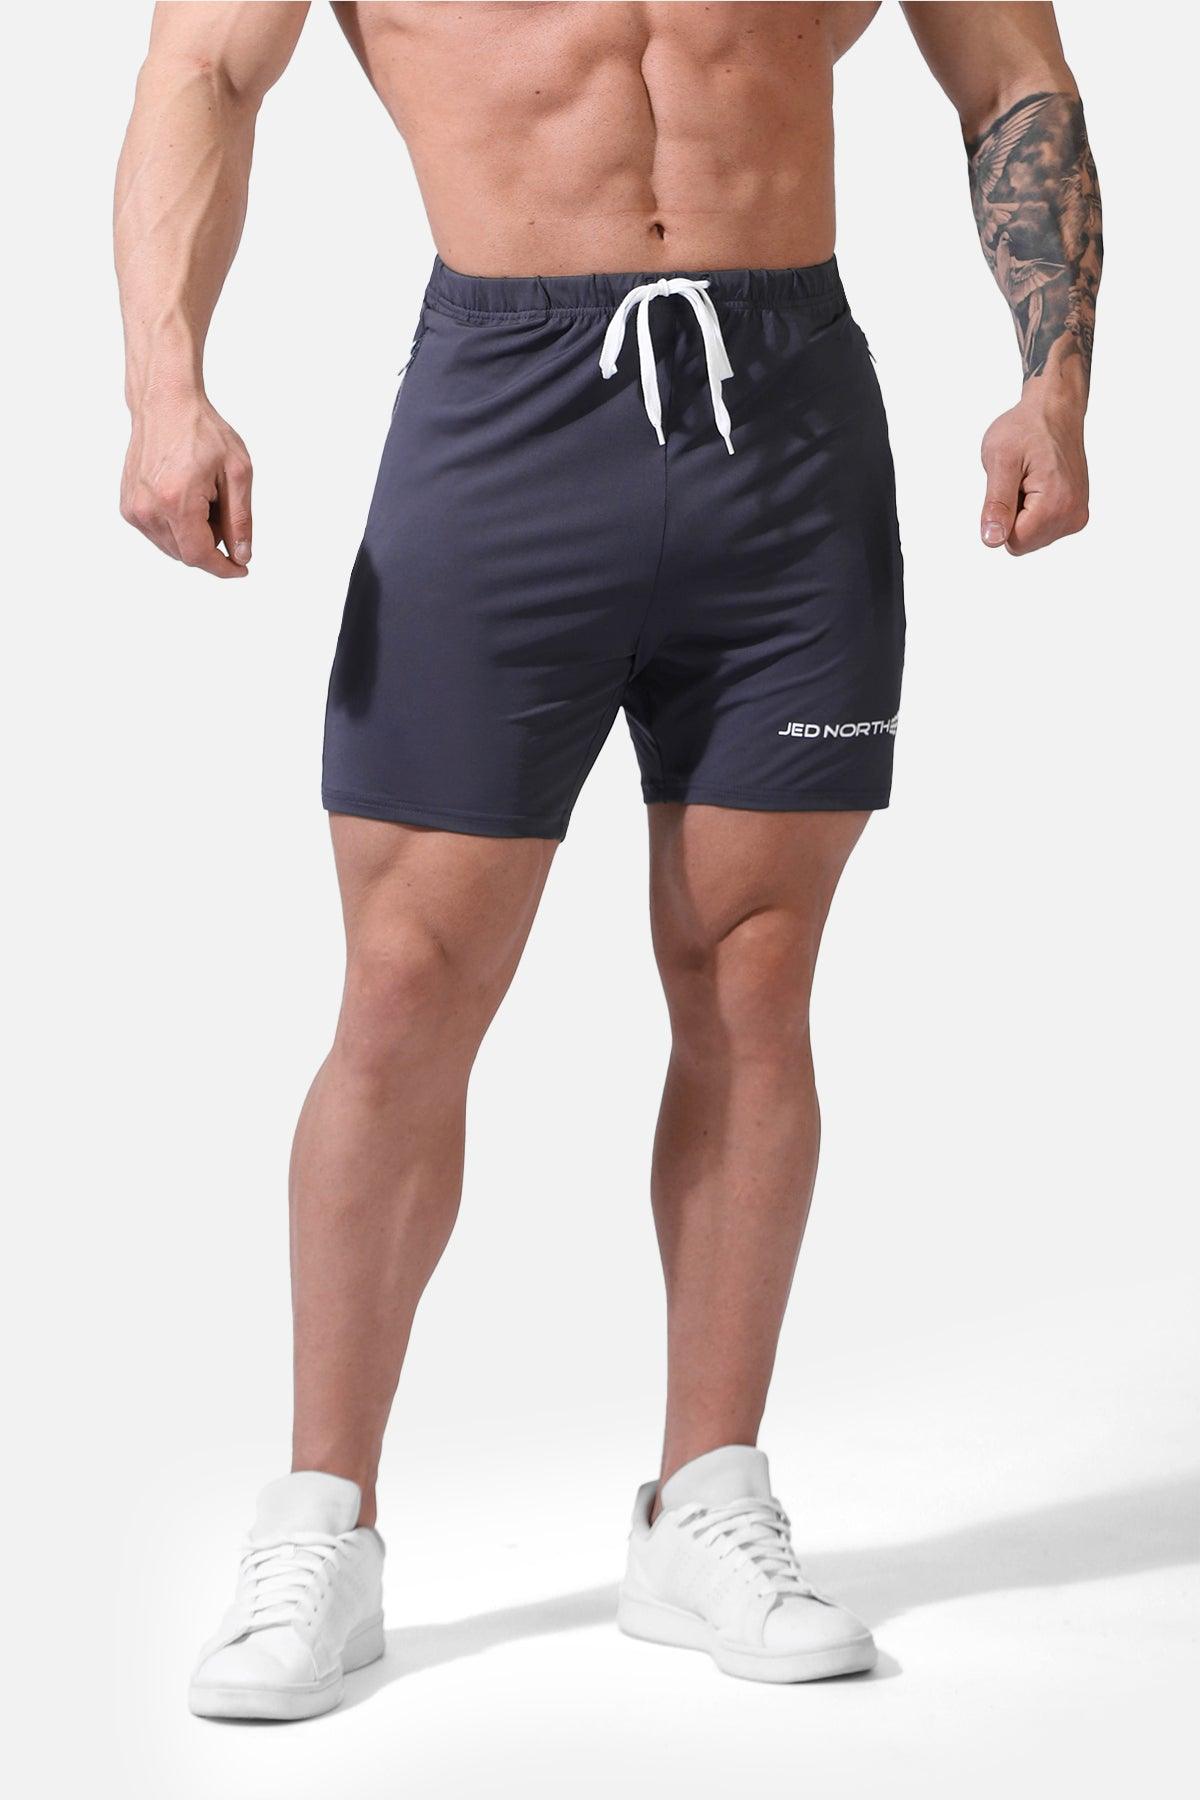 Agile Plus 5.5'' Bodybuilding Shorts w Zipper Pockets - Gray